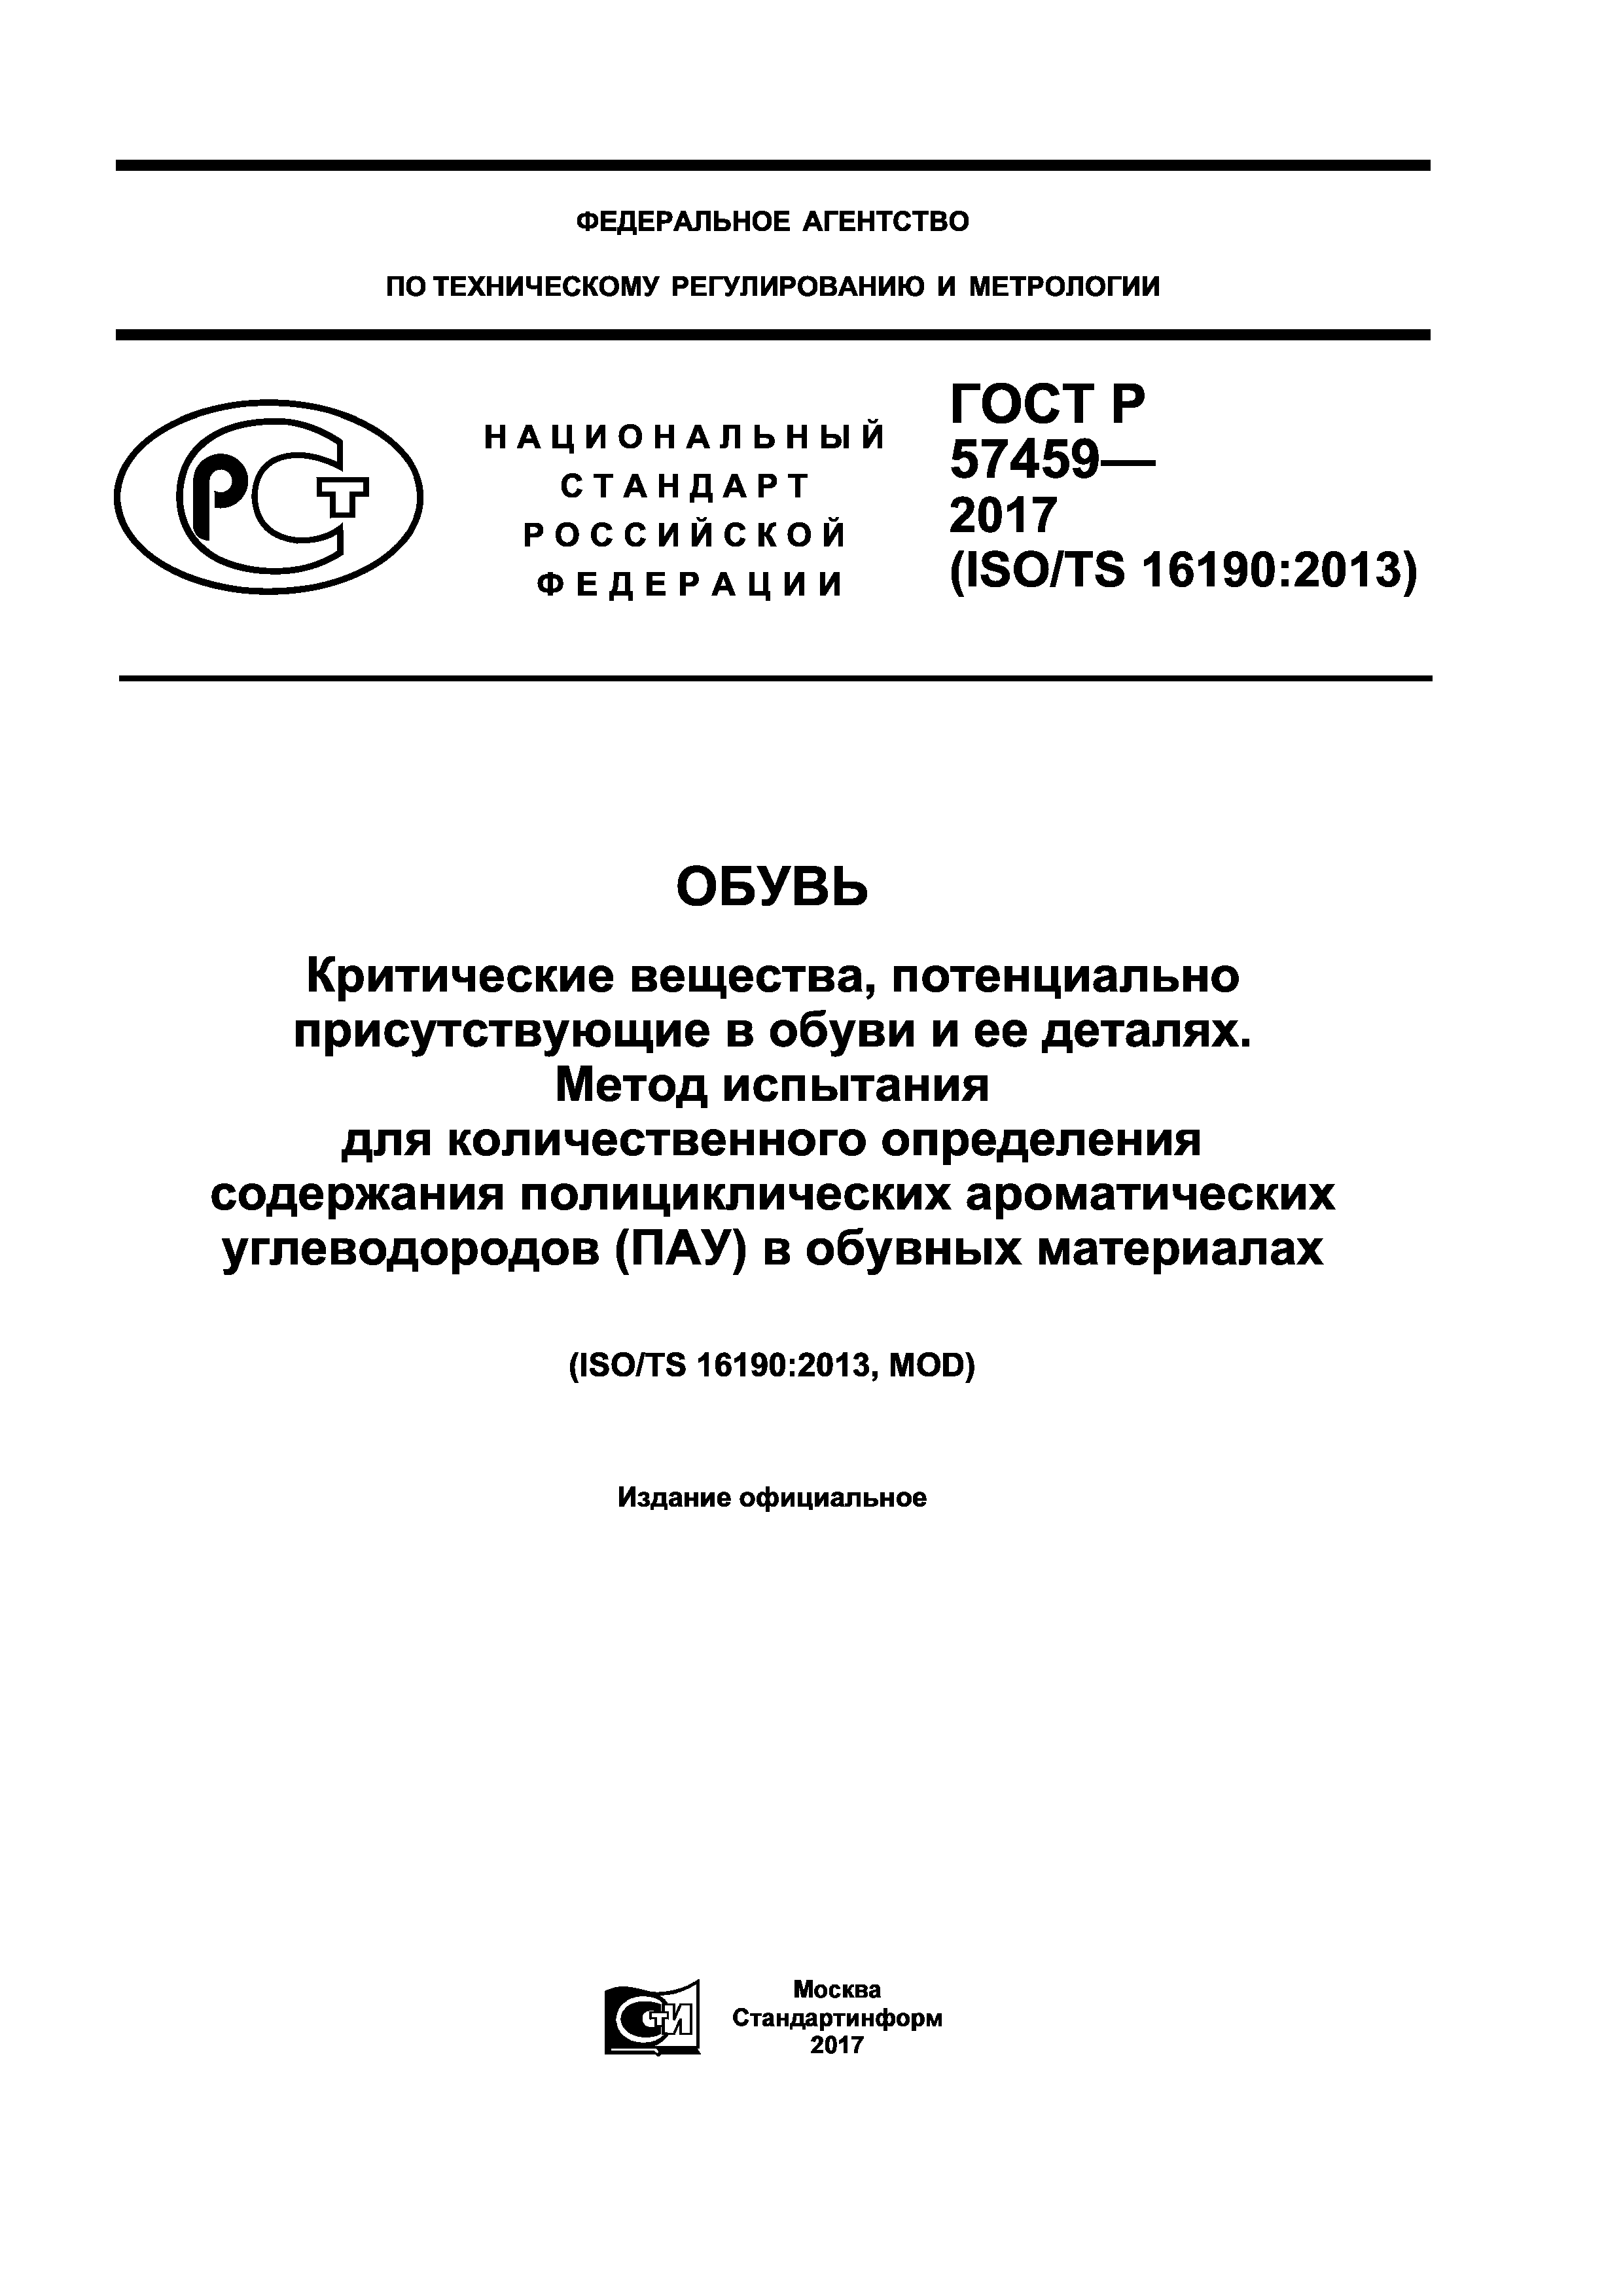 ГОСТ Р 57459-2017